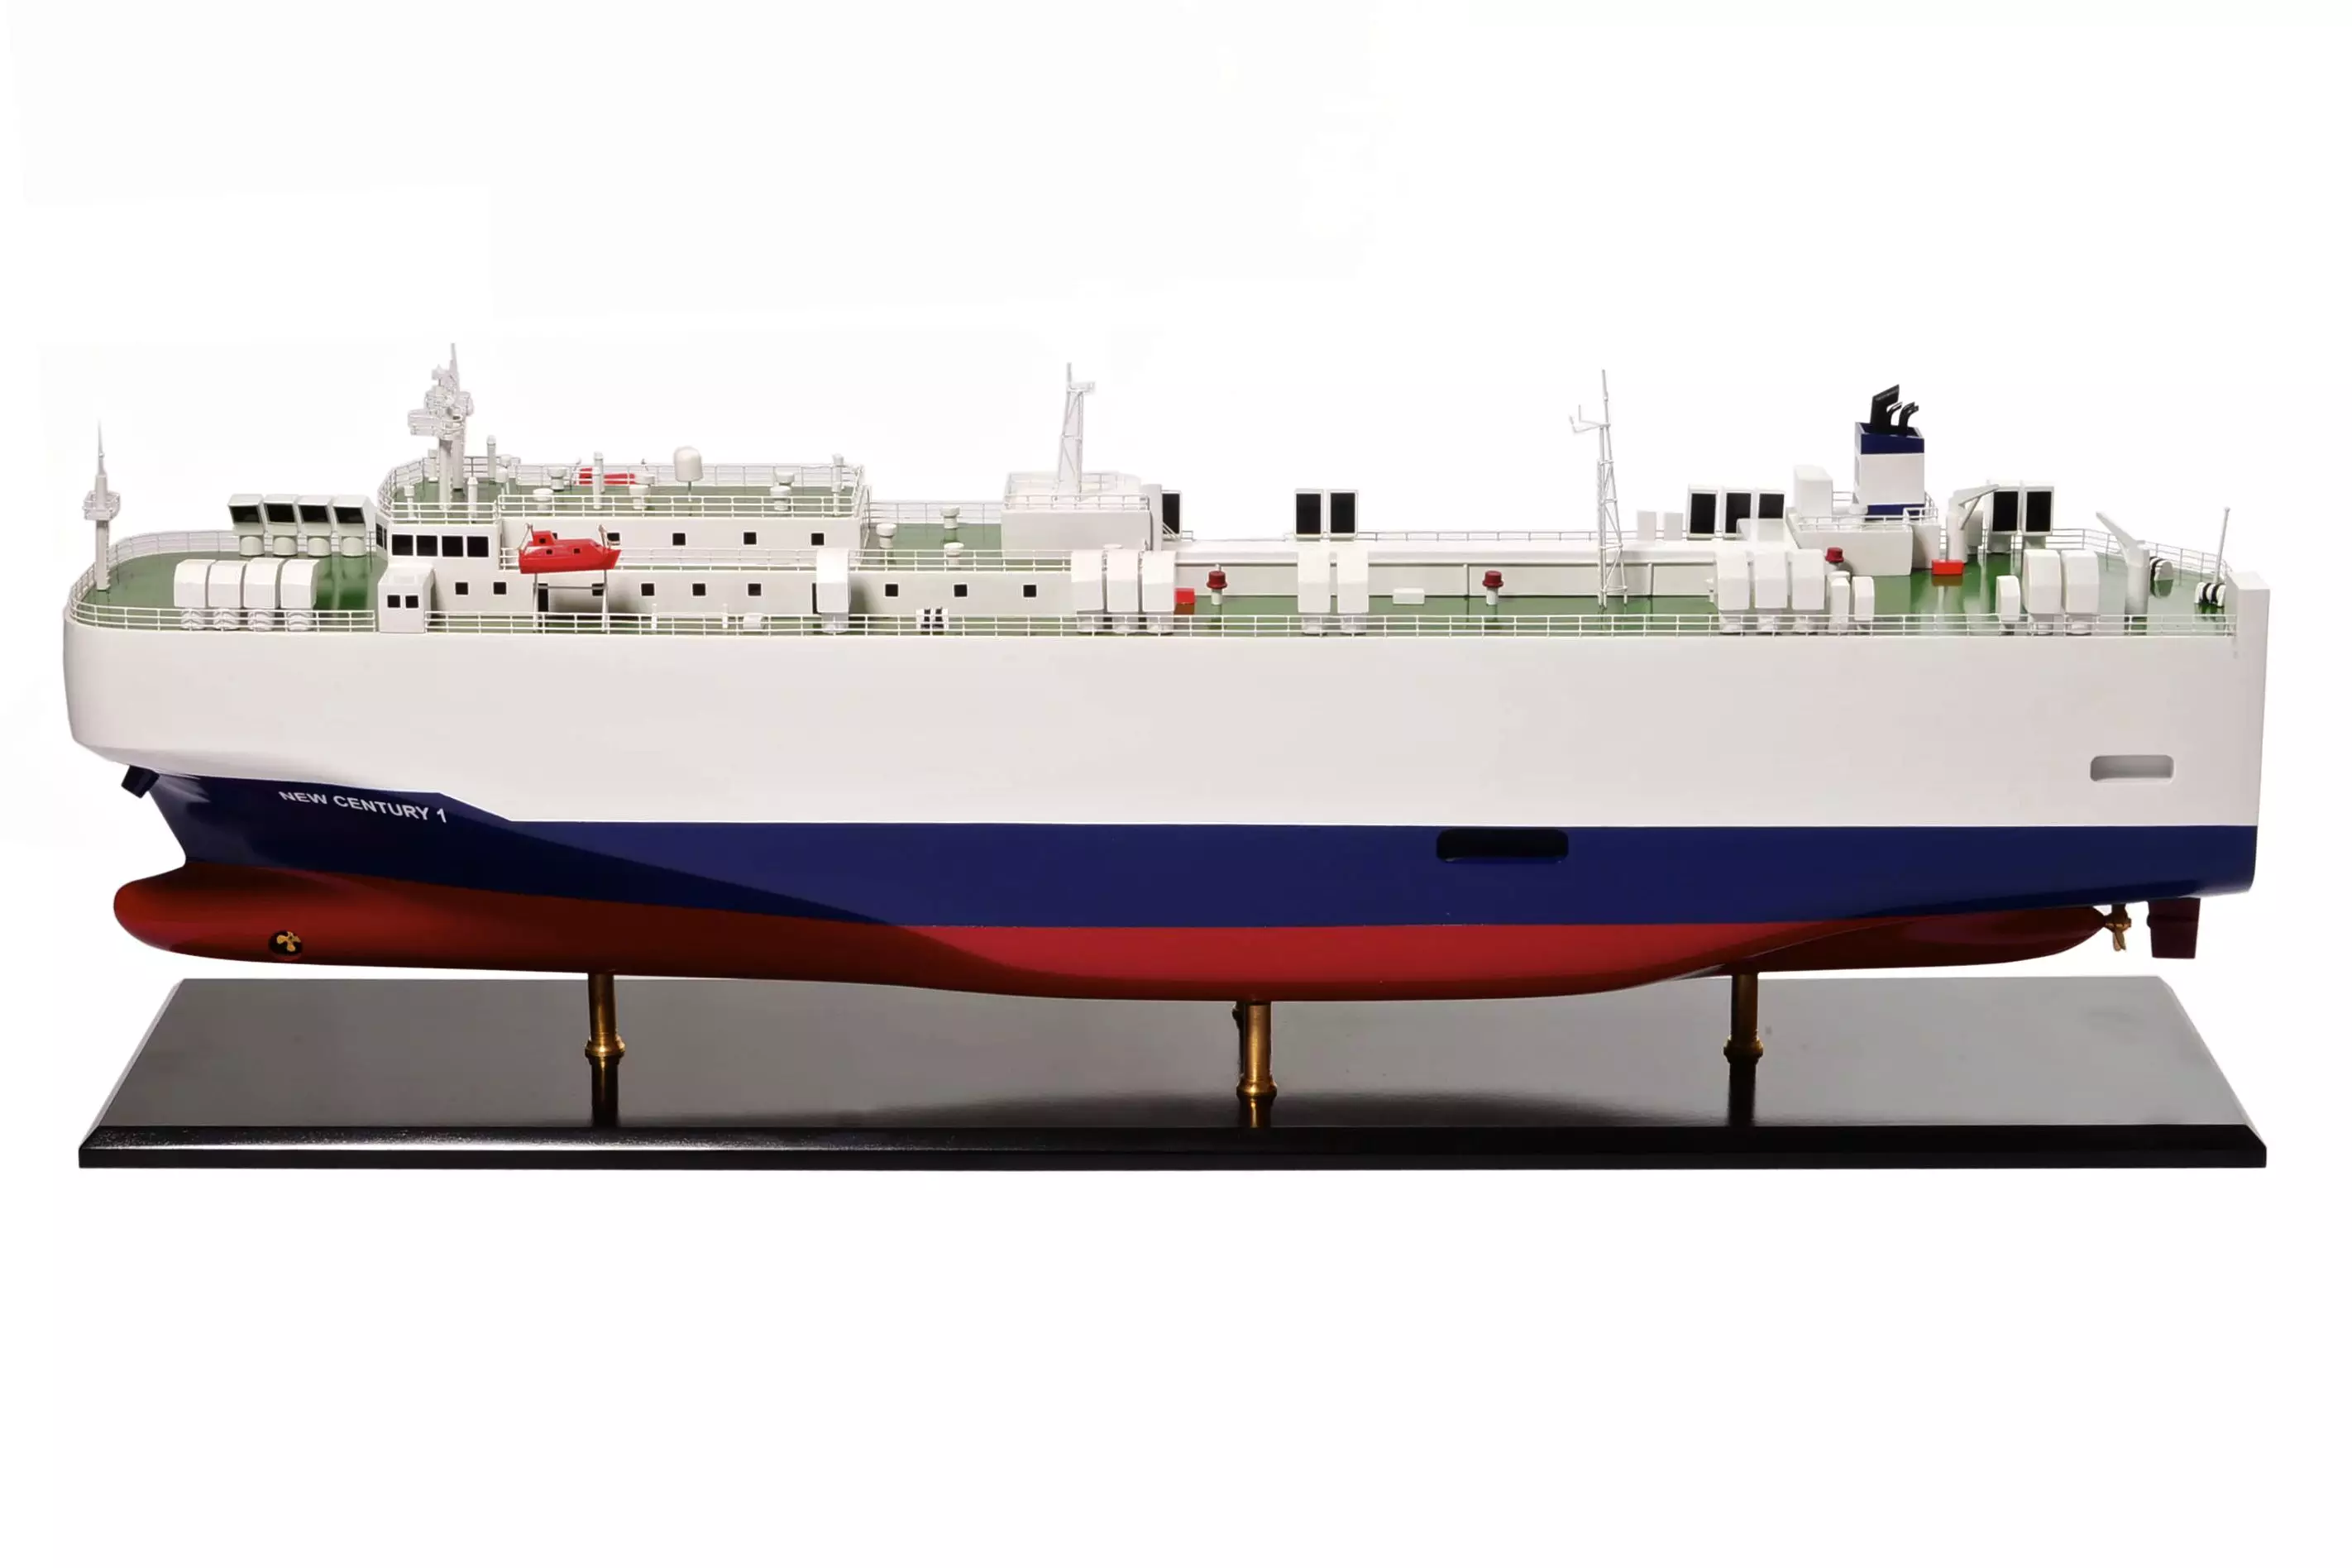 http://premiershipmodels.us/wp-content/uploads/sites/6/2019/11/1834-10911-New-Century-1-Vehicle-Carrier-Model-Ship.jpg